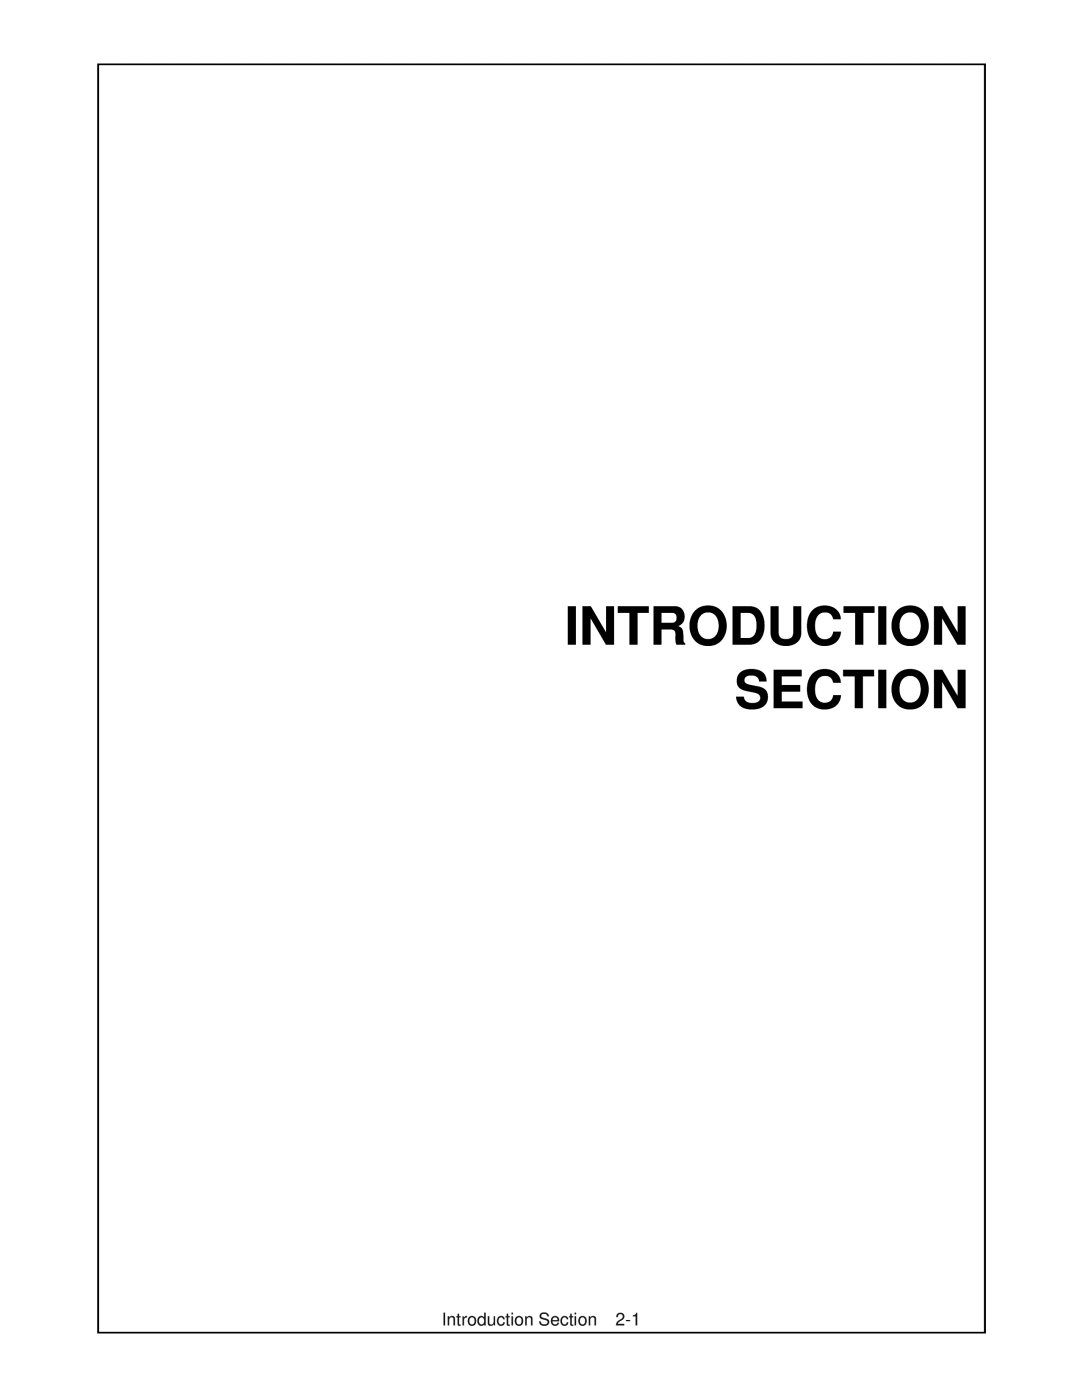 Alamo SR14, SR20 manual Introduction Section 